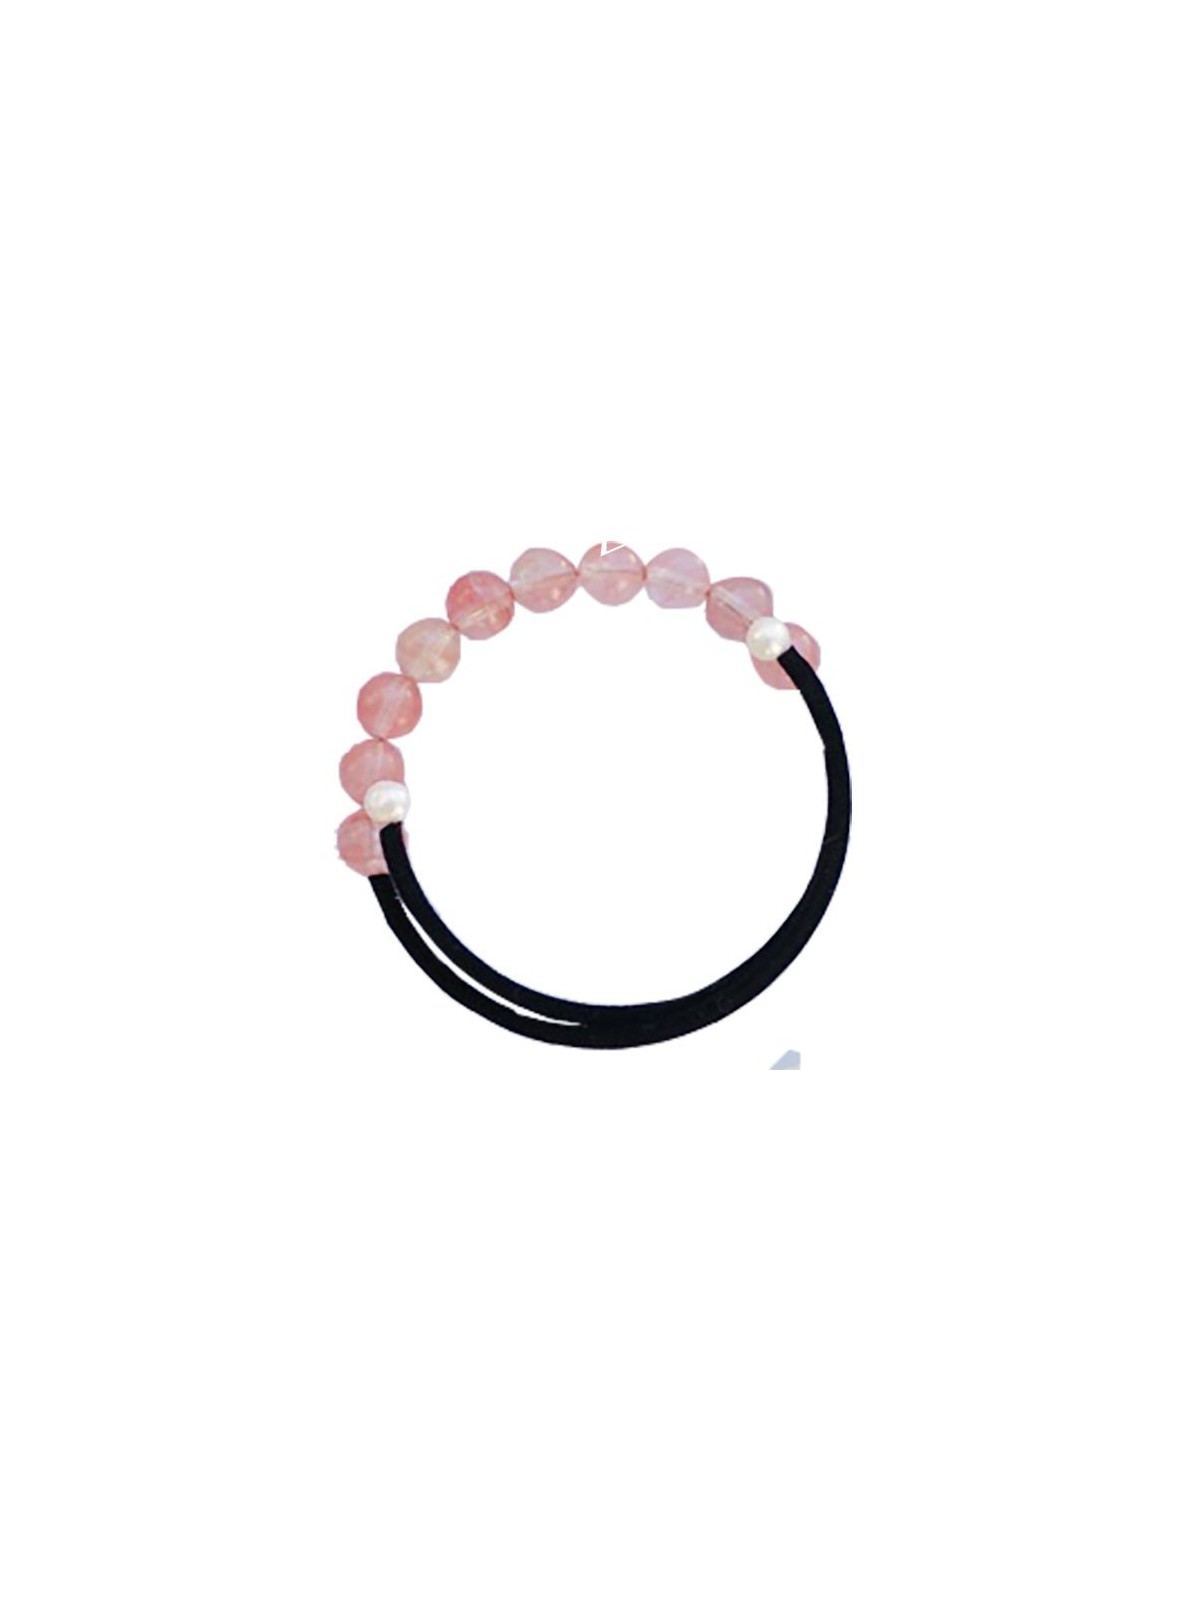 Brazalete terciopelo negro y perlas de agua dulce rosas